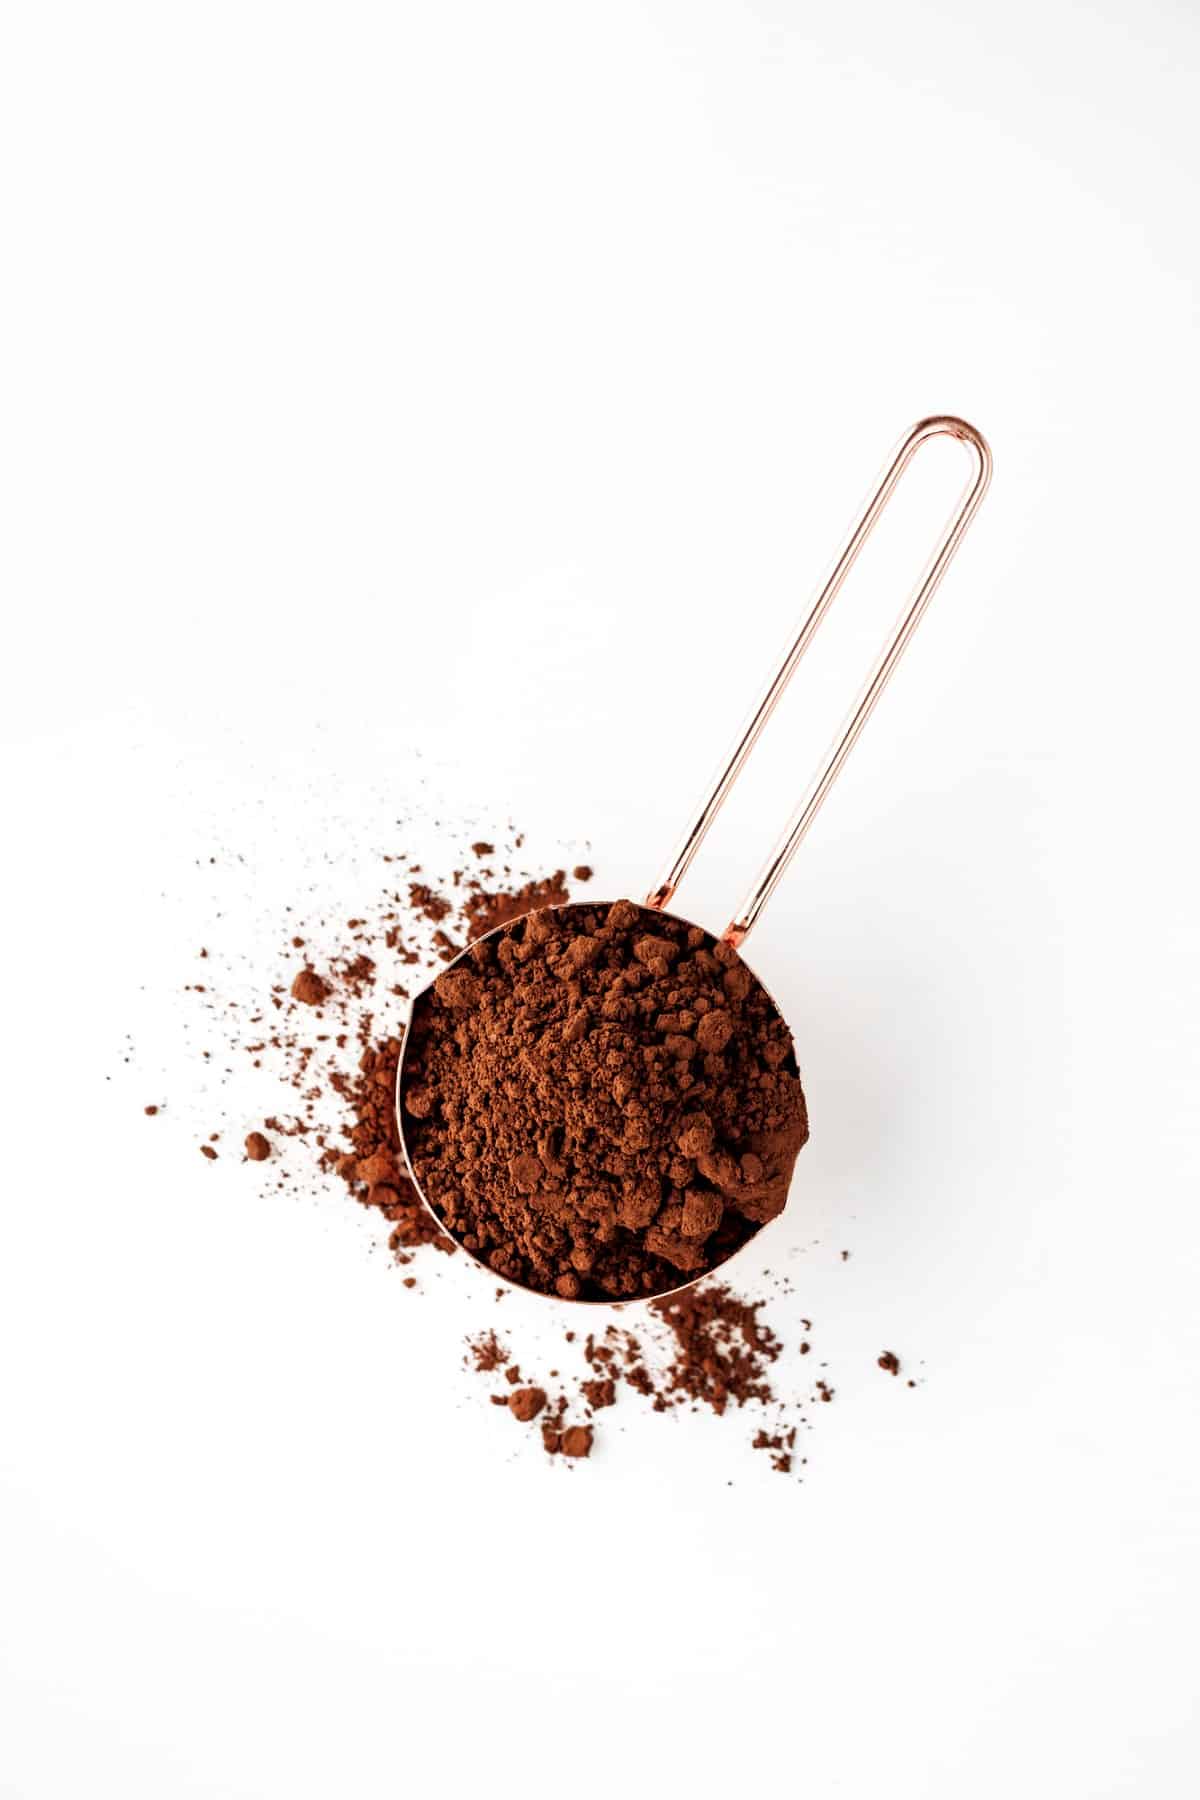 Cocoa powder in measuring cup.